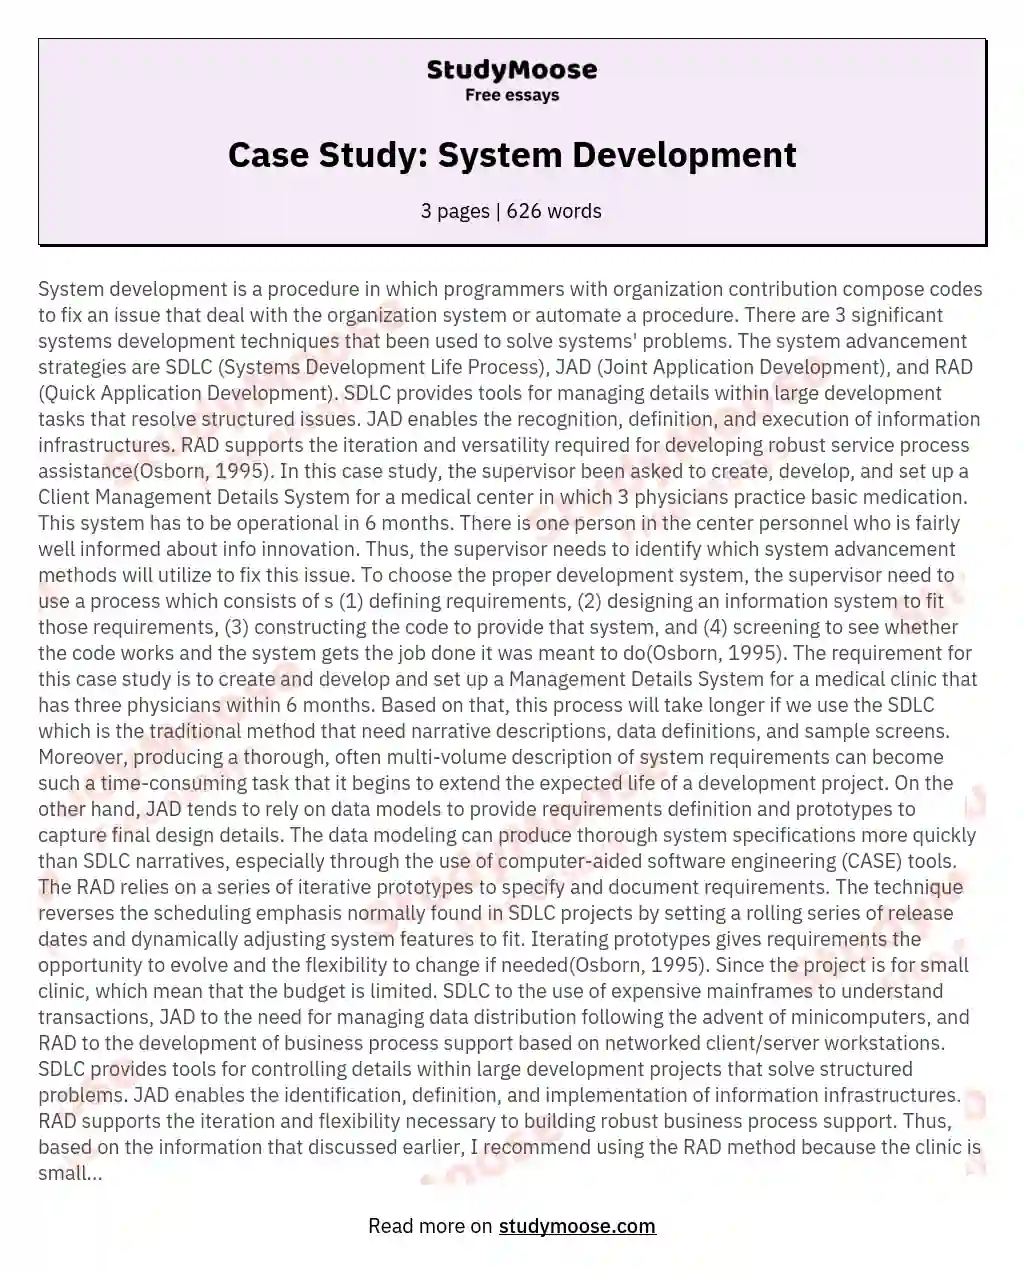 Case Study: System Development essay